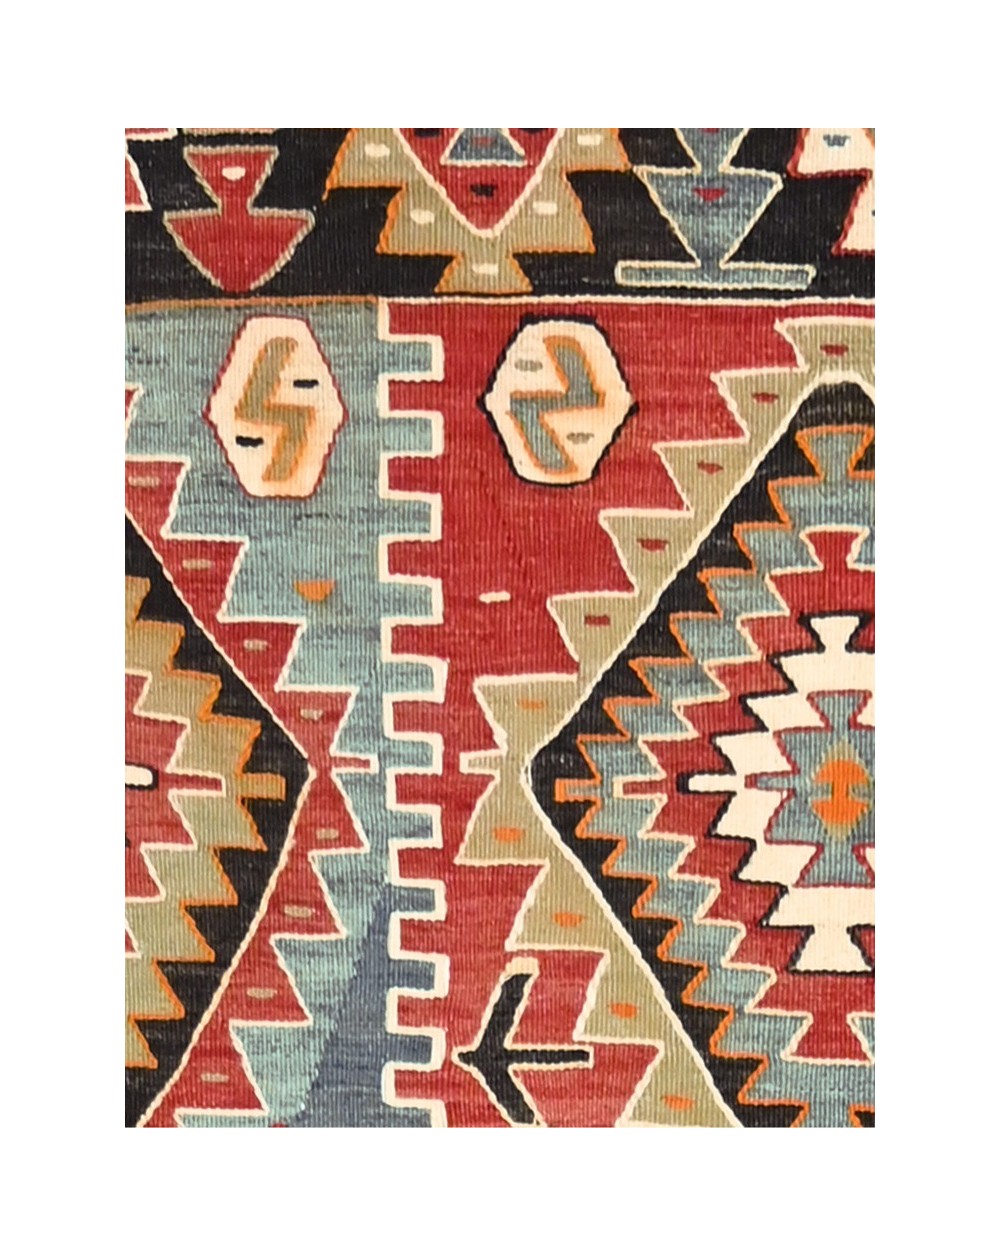 New kilim - Contemporary pattern